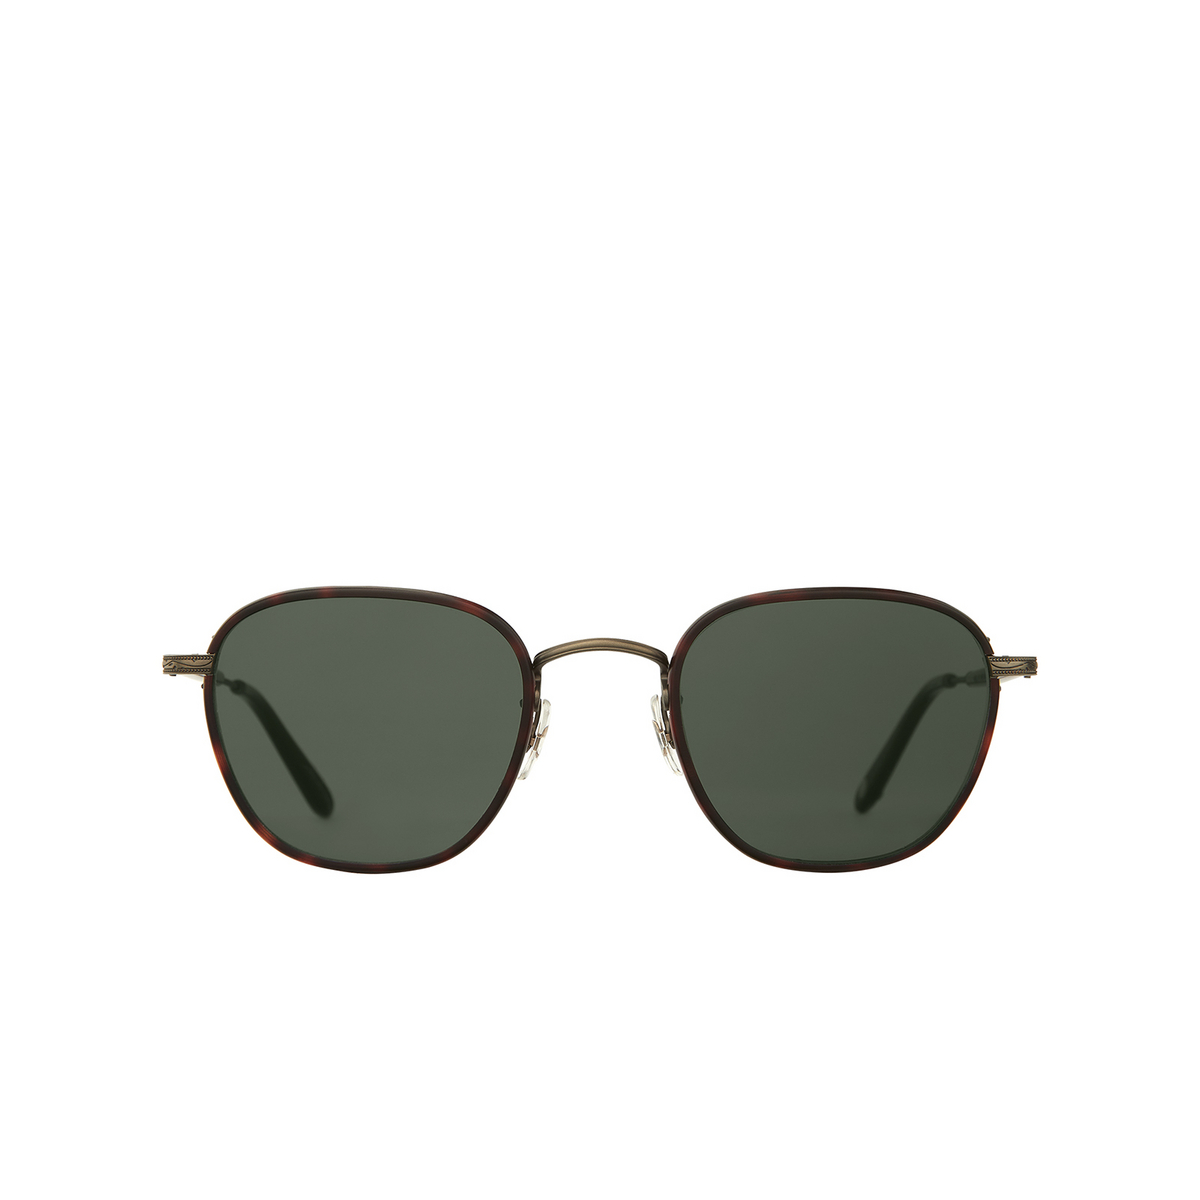 Garrett Leight® Square Sunglasses: Grant Sun color Matte Kona Tortoise - Antique Gold MKONT-ATGII-MRT/SFPG15 - front view.